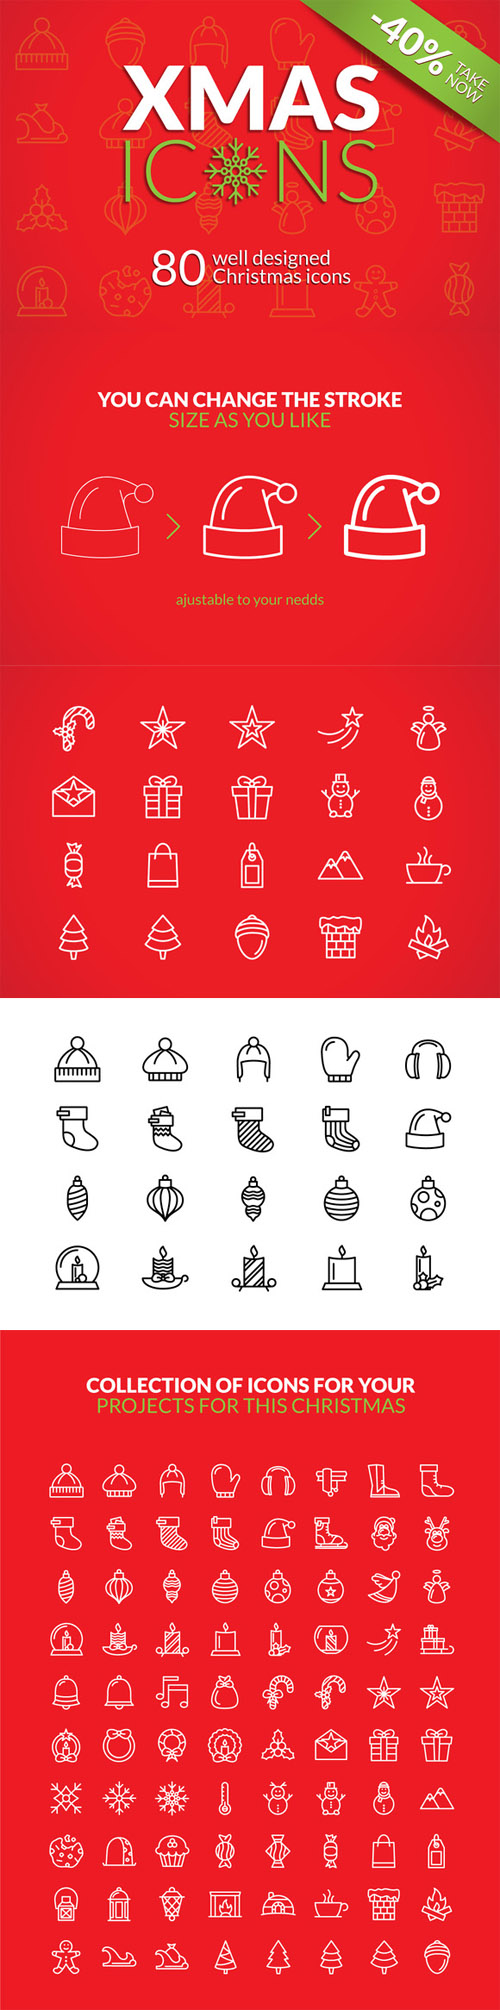 CreativeMarket - Christmas Icons Set 103087